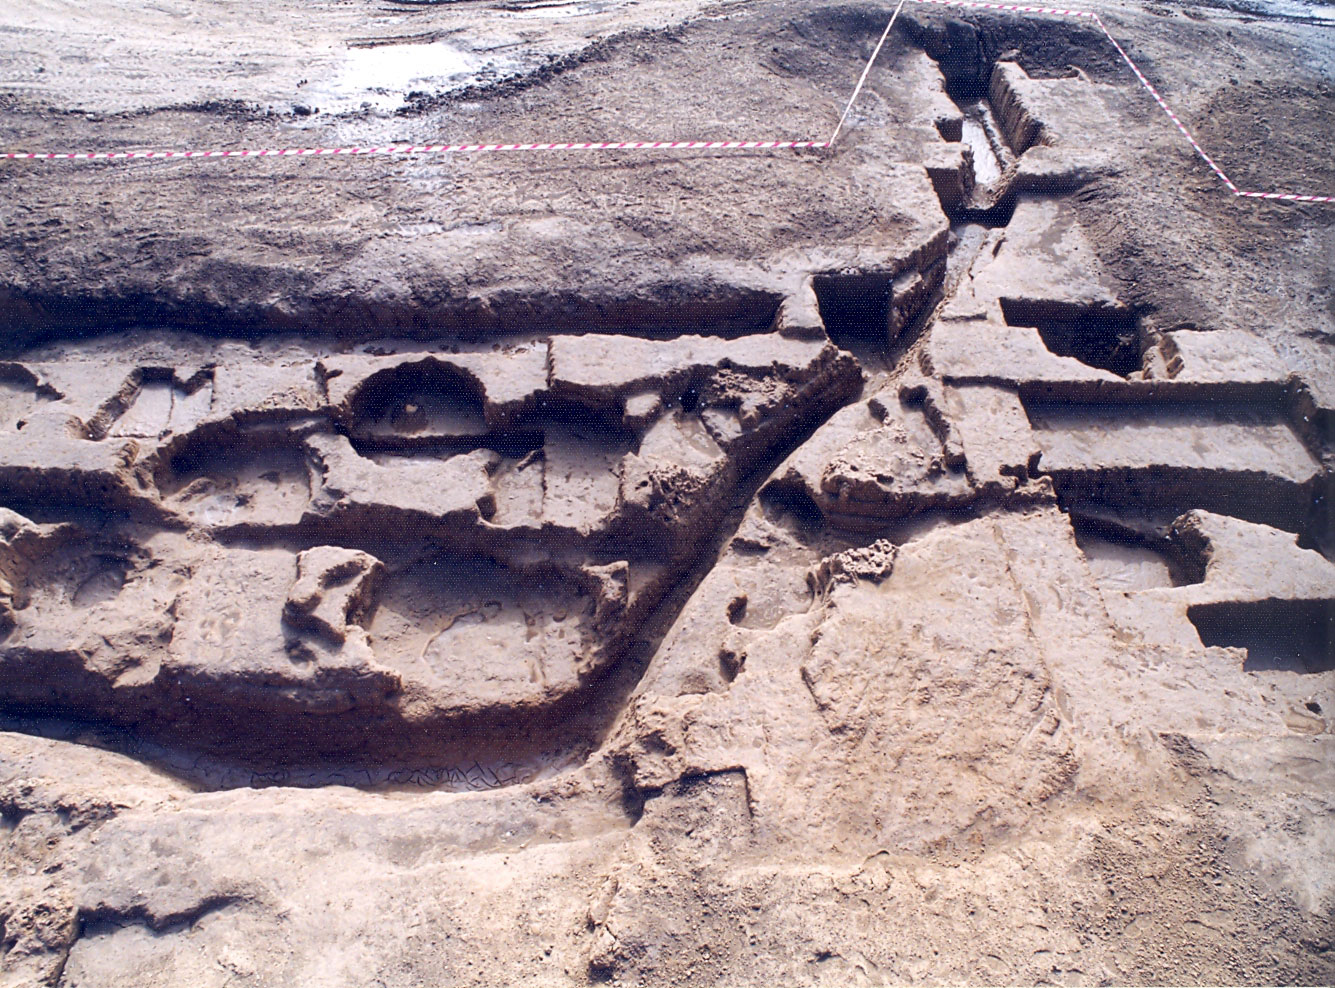 The Tiszazug region and the Öcsöd-Kováshalom site in Late Neolithic